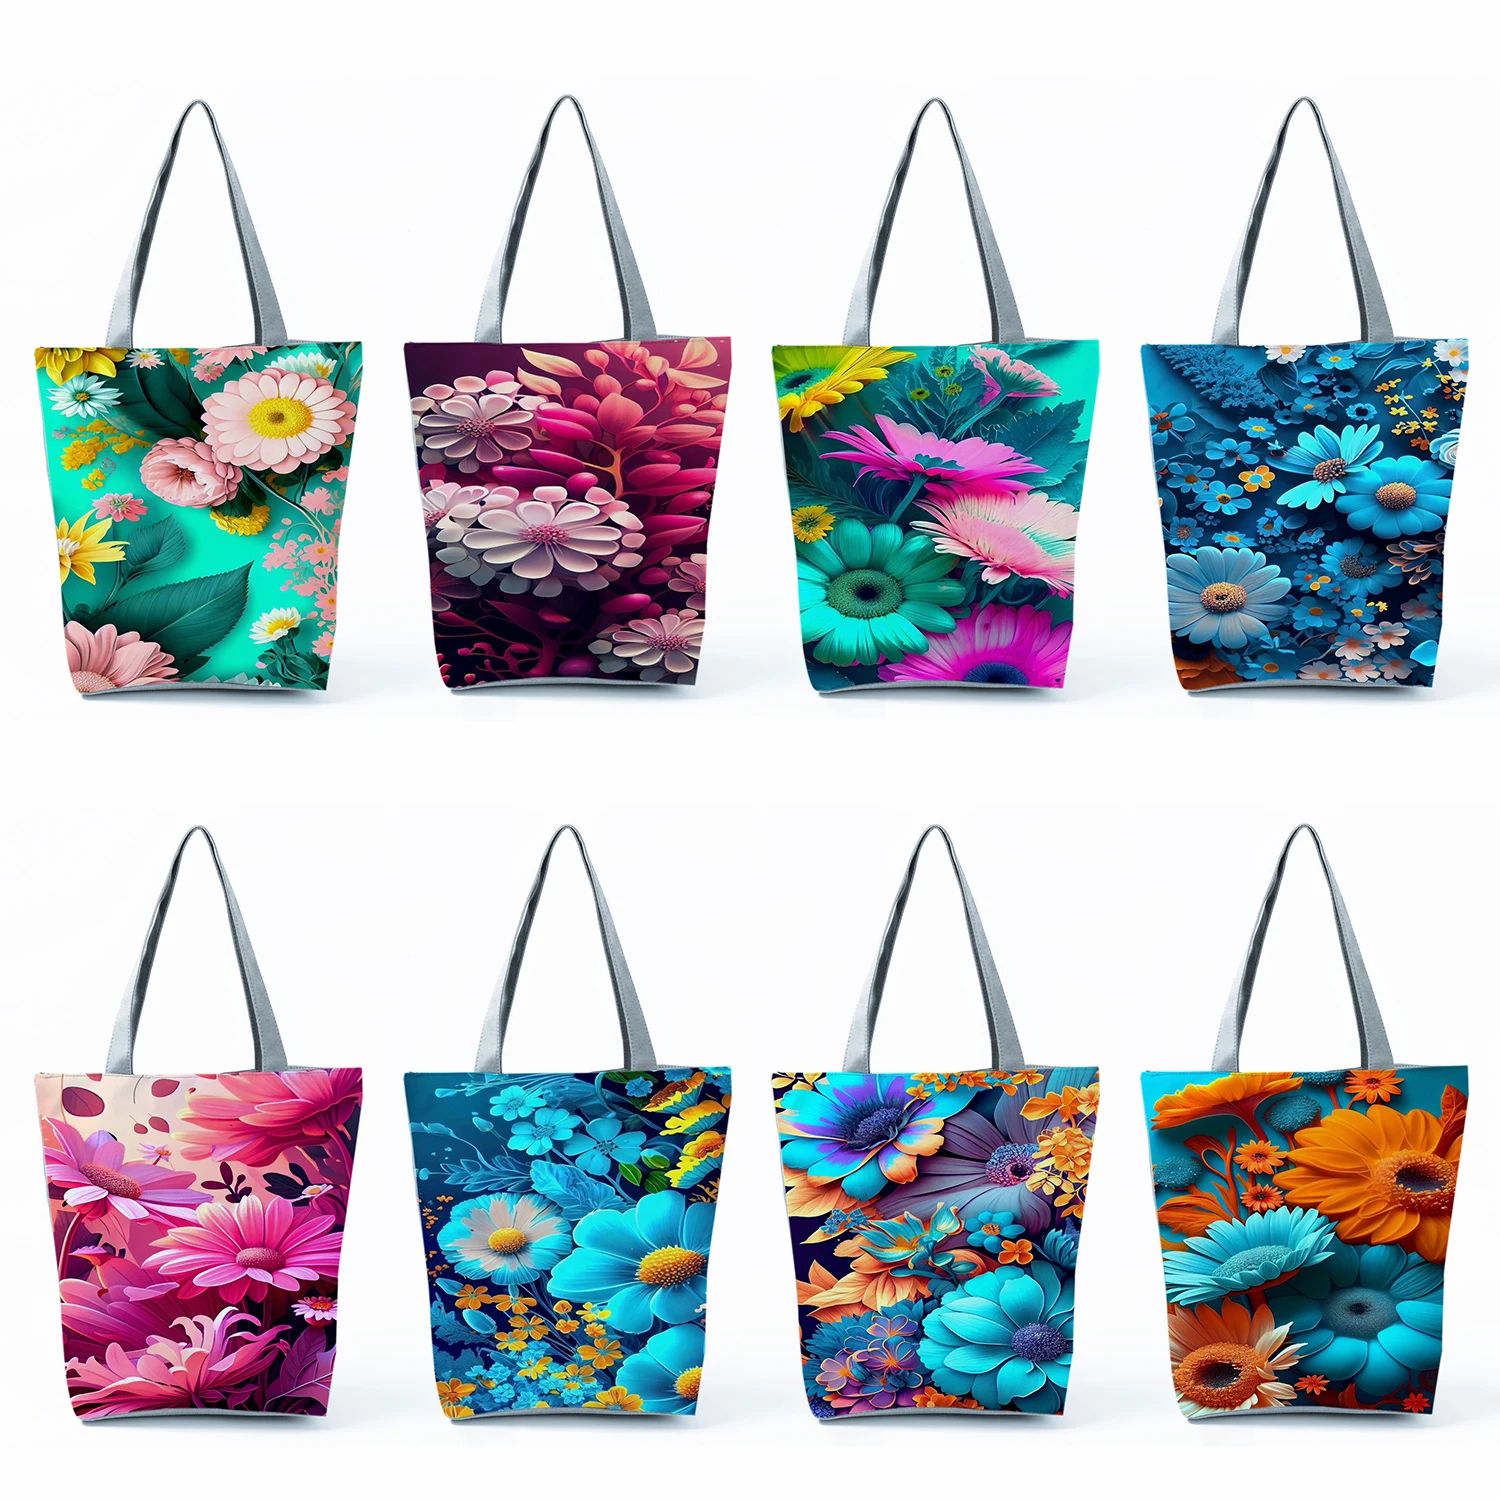 

High Capacity Bright Colors Flower Design Women Handbags Beach Traveling houlder Bag Fashion Printed Eco Reusable Shopping Bag